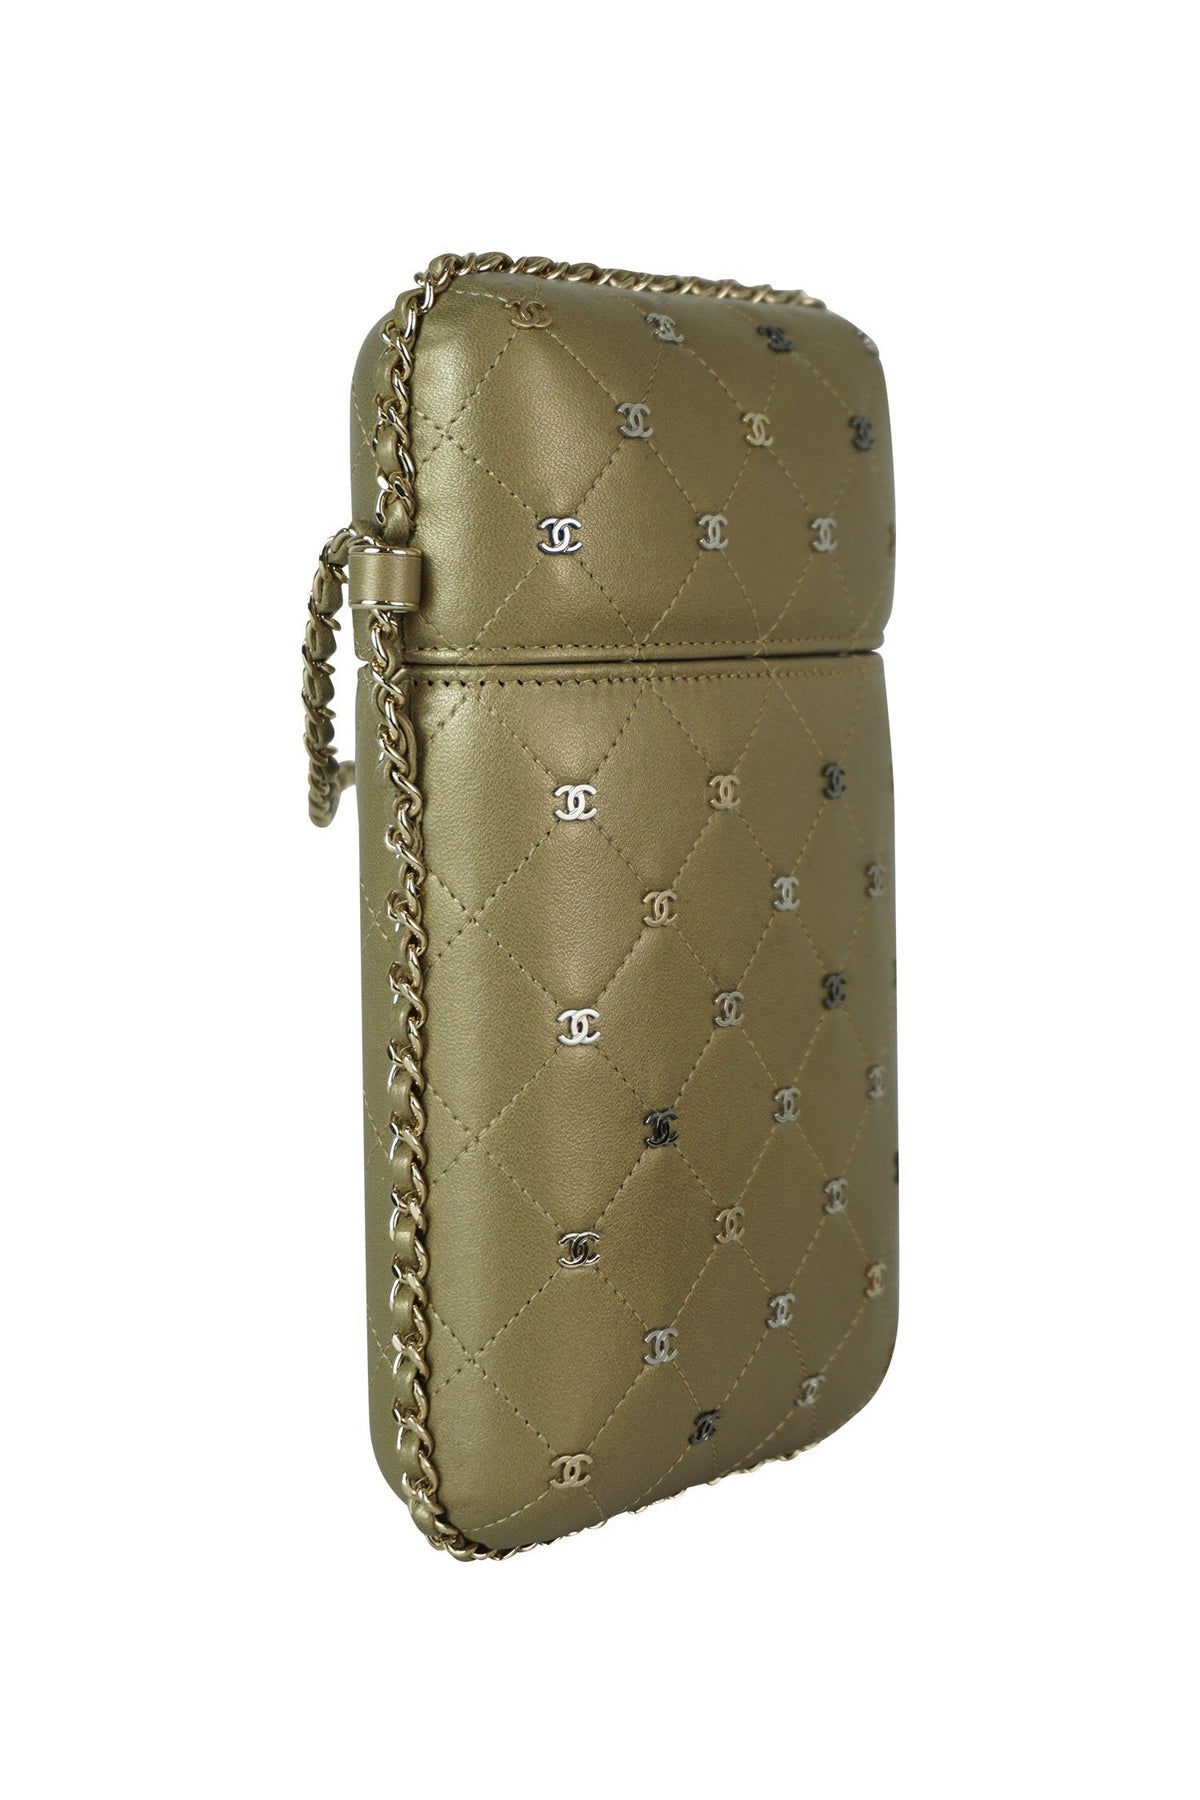 Chanel Phone Holder Bag